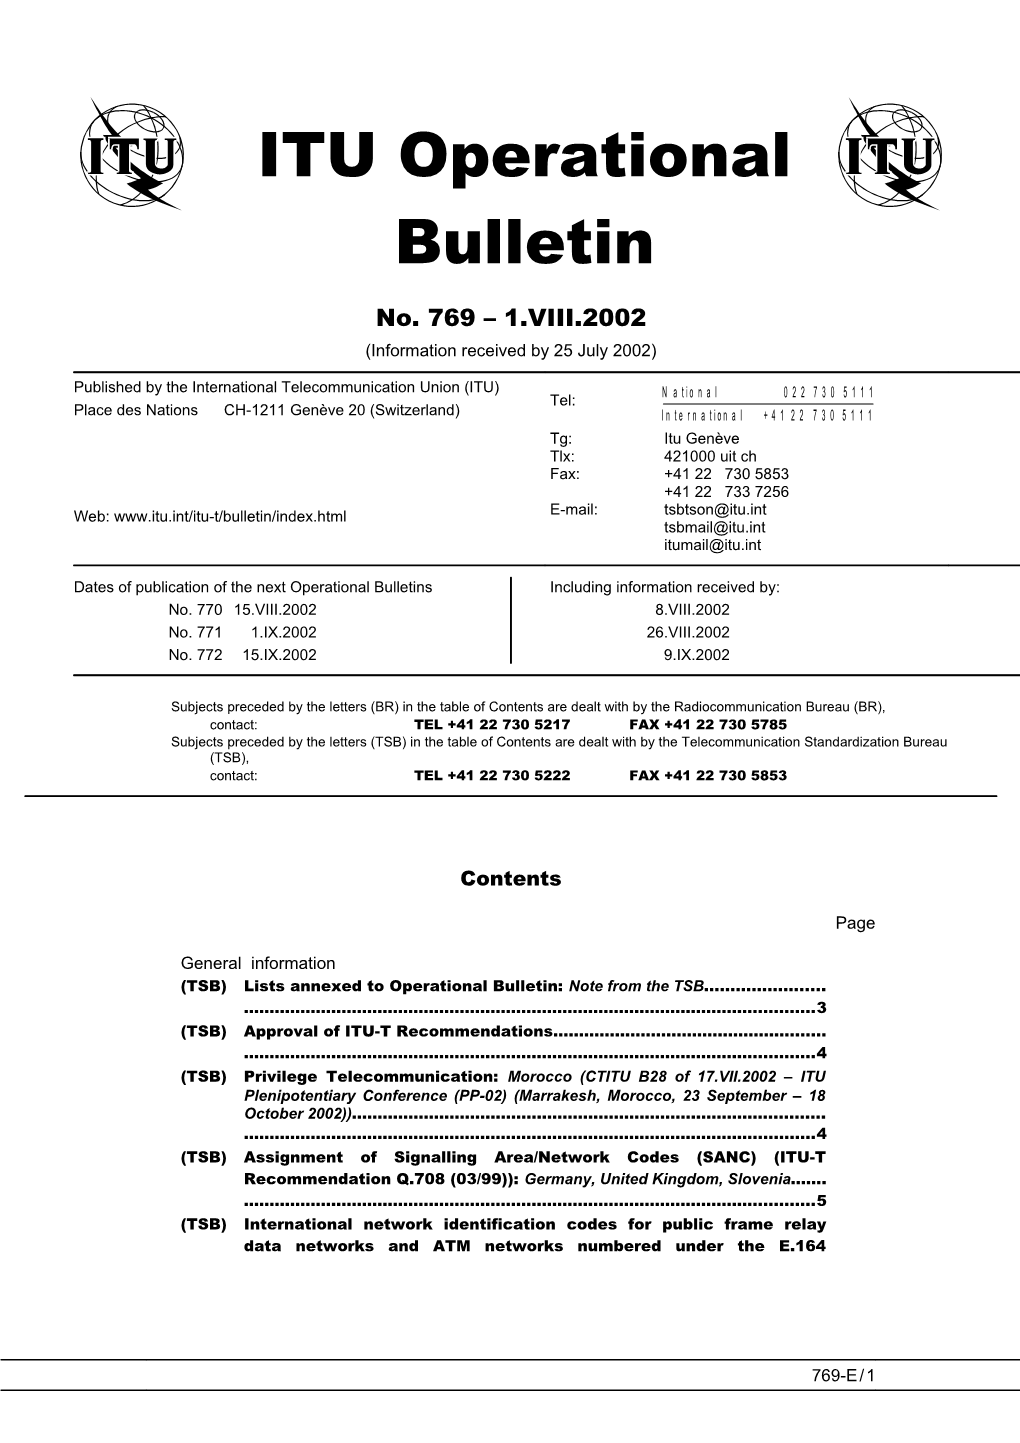 ITU Operational Bulletin 769 - 1.VIII.2002